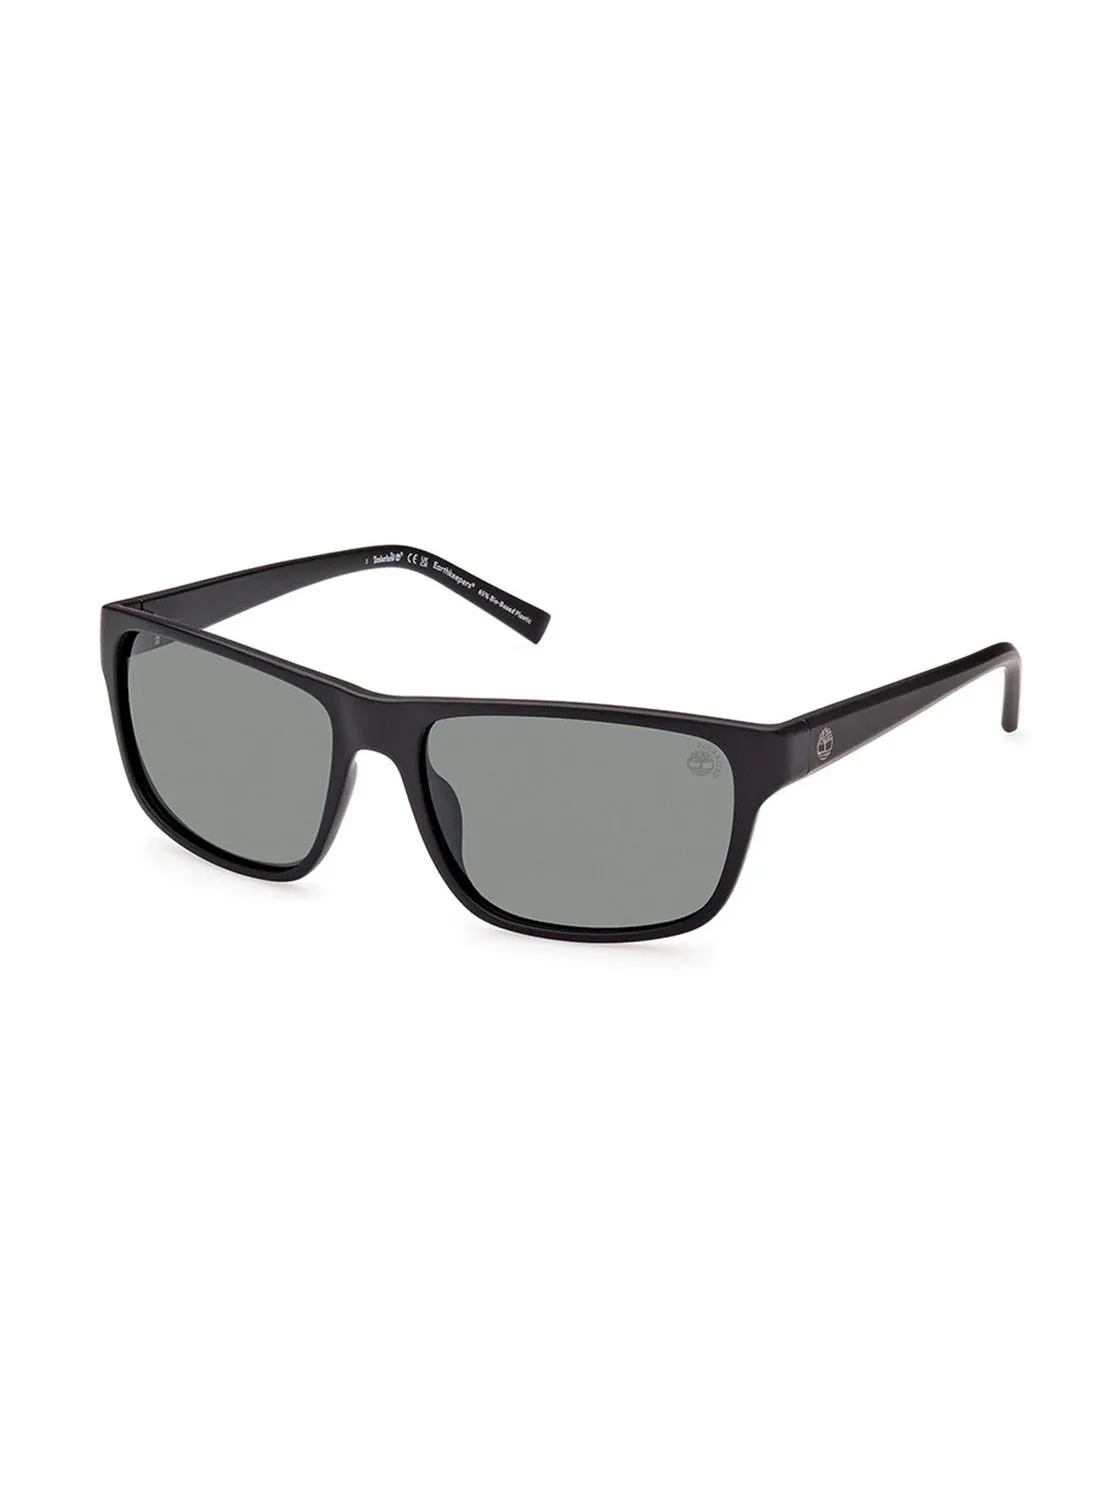 Timberland Sunglasses For Men TB929602R60